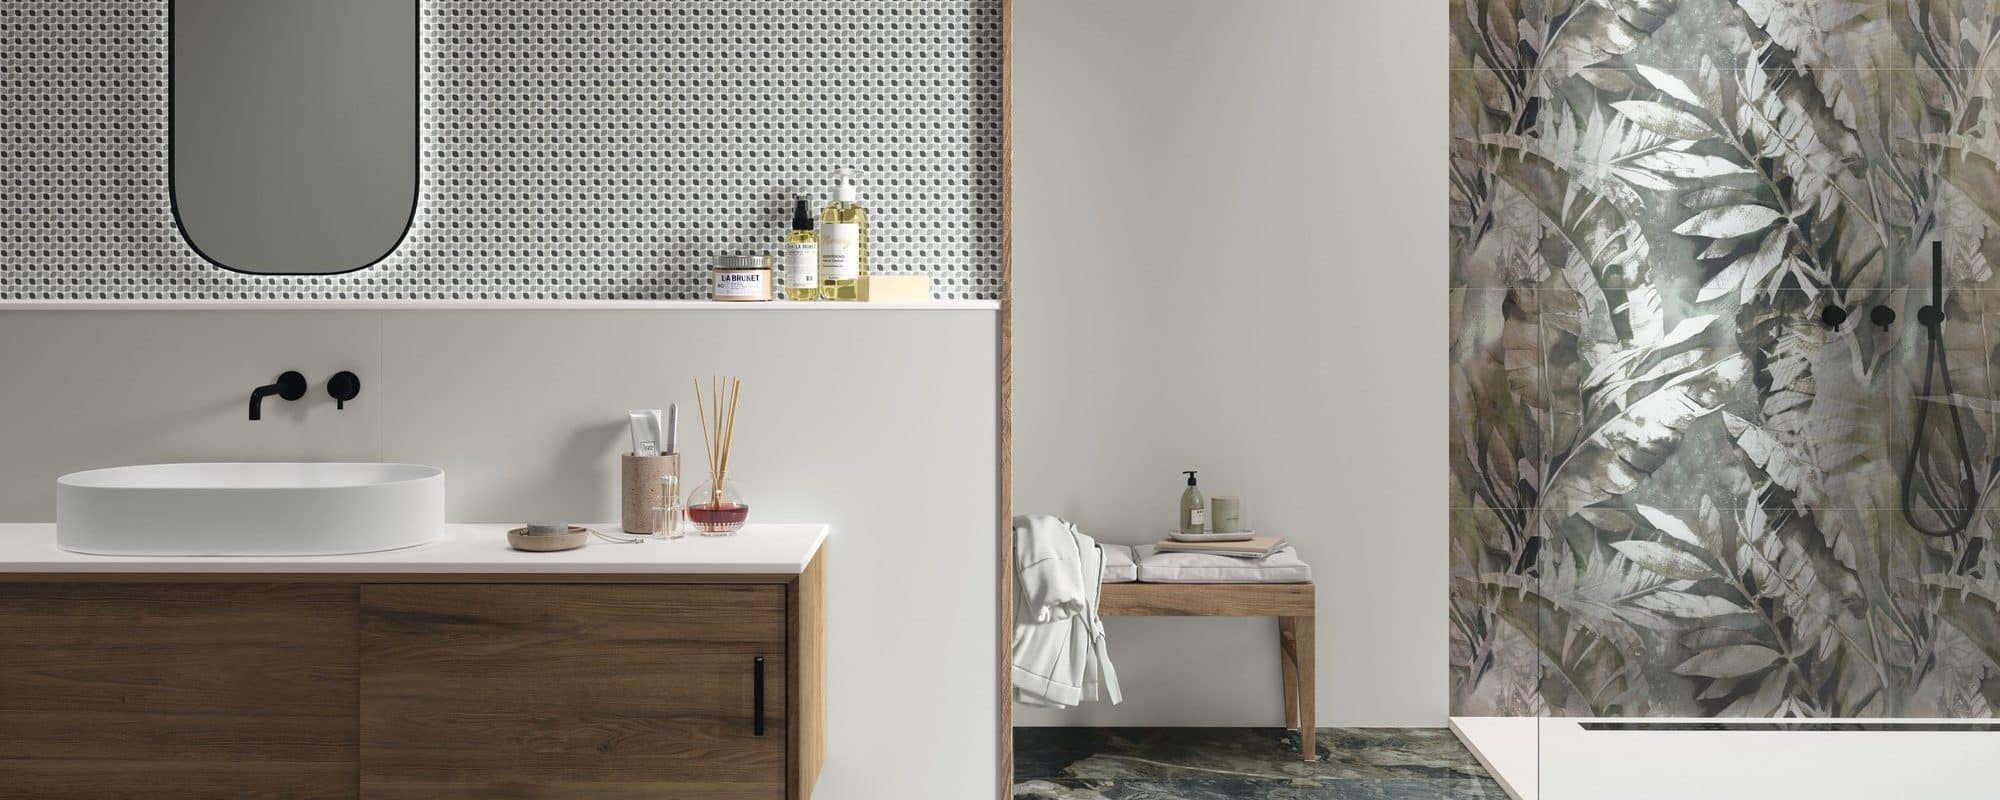 dedalus marble effect bathroom tiles uk slider 1